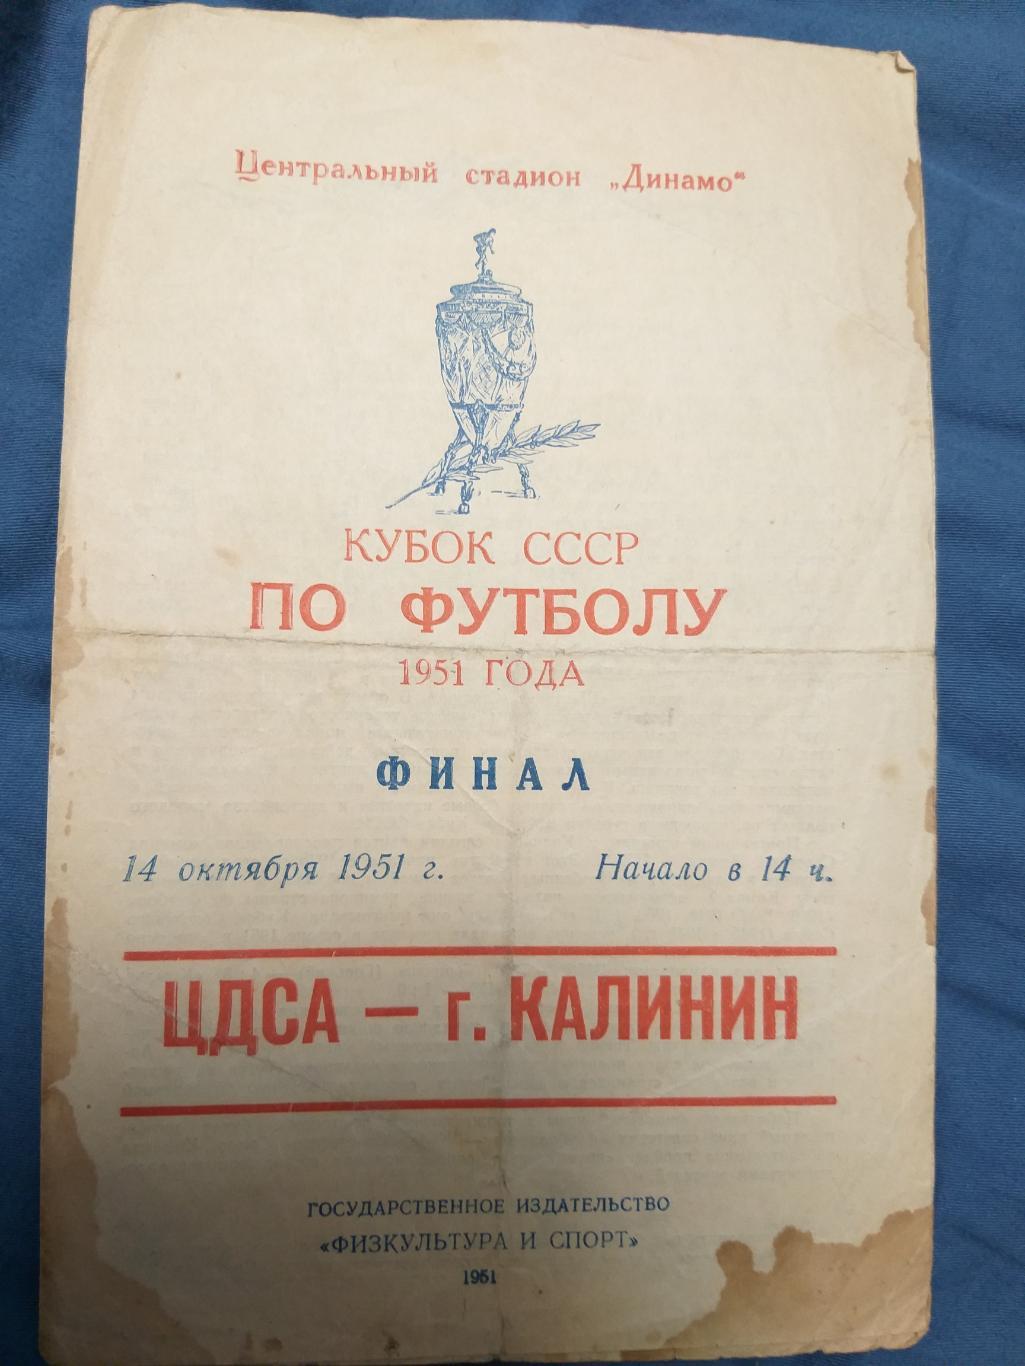 ЦДСА-Команда города Калинин 14.10.1951